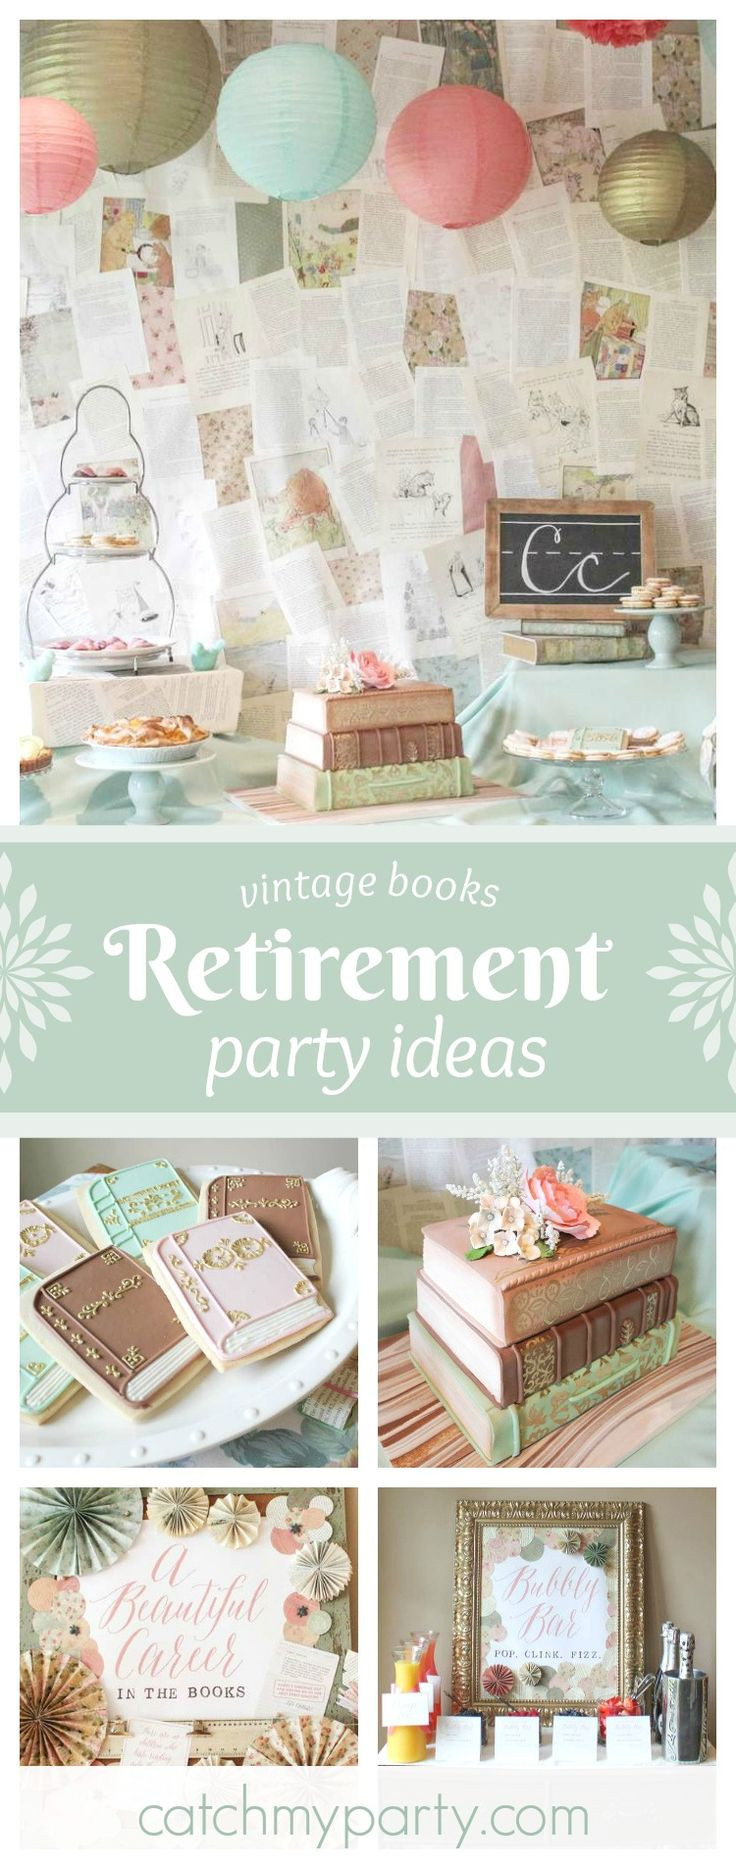 Retirement Party Theme Ideas
 Best 25 Retirement party themes ideas on Pinterest